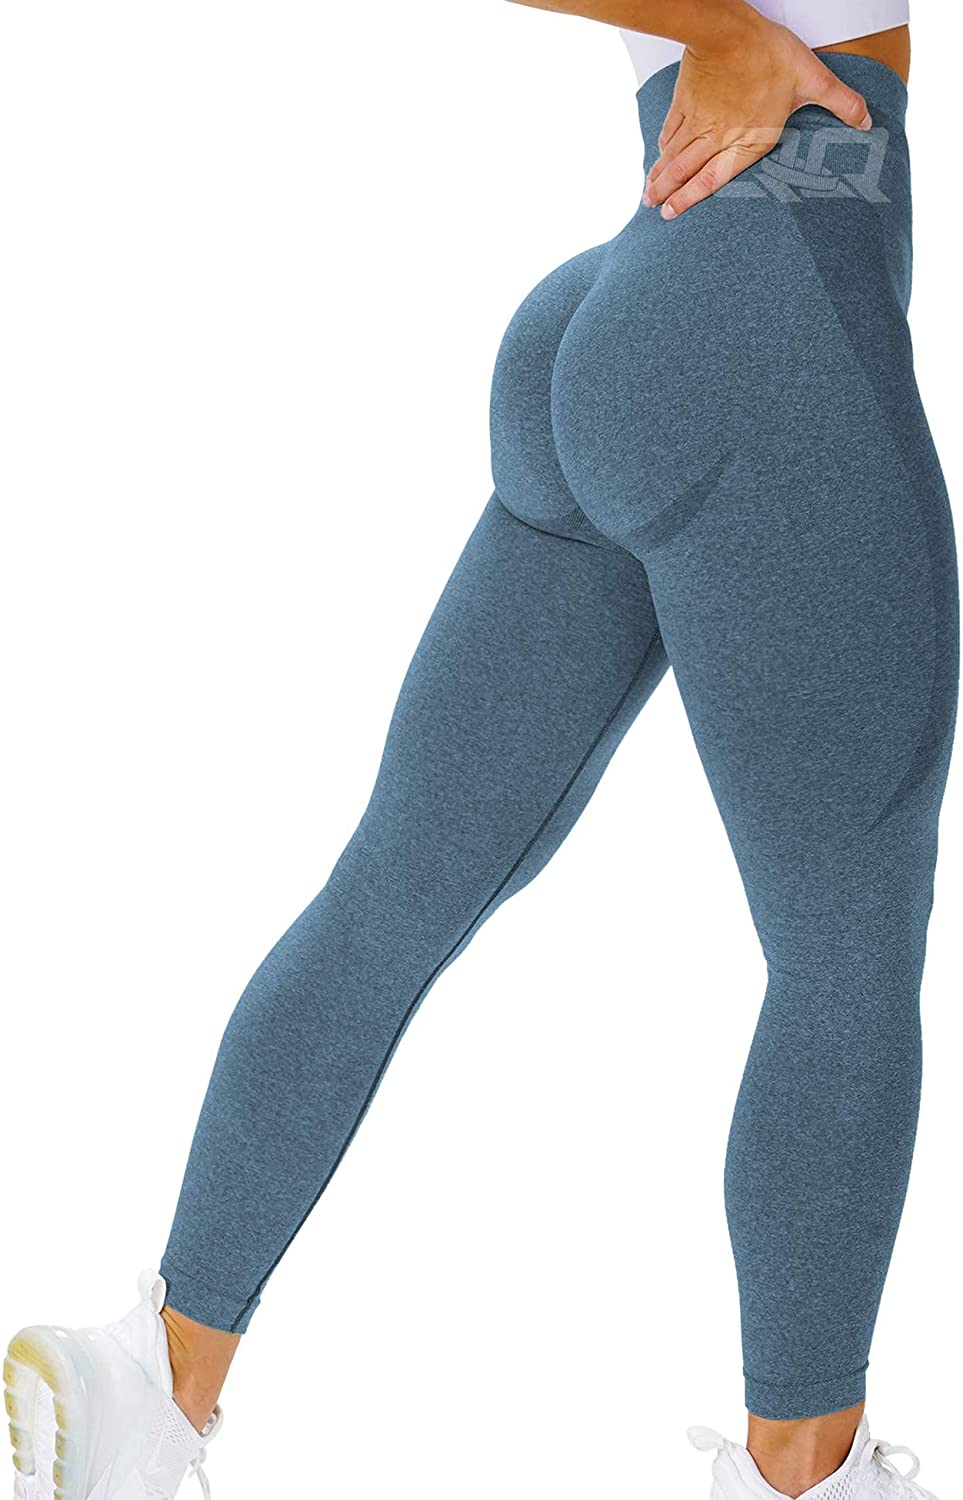 QRIC Women's High Waist Workout Vital Seamless Leggings Butt Lift Yoga  Pants Stretchy Fitness Gym Tights Light Purple, L 